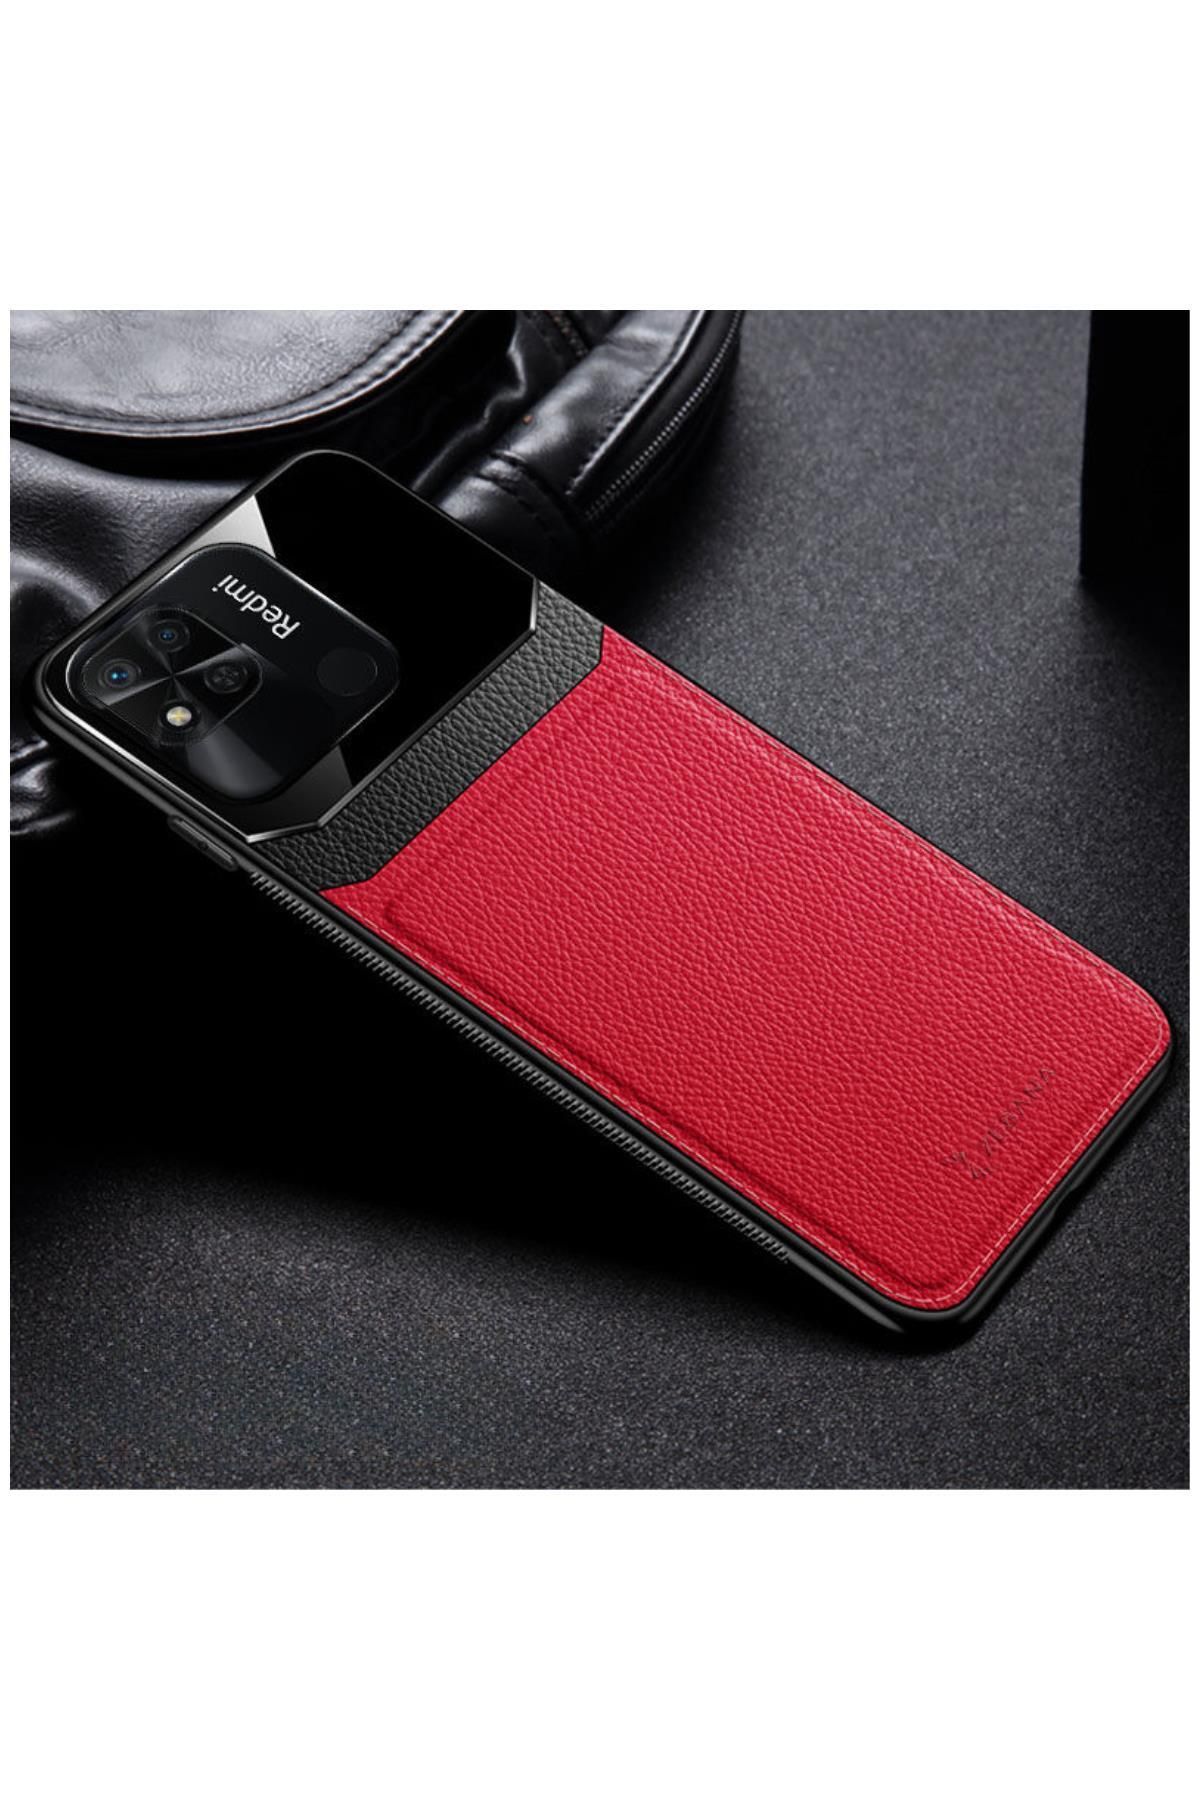 Zebana Xiaomi Redmi 10a Uyumlu Kılıf Lens Deri Kılıf Kırmızı